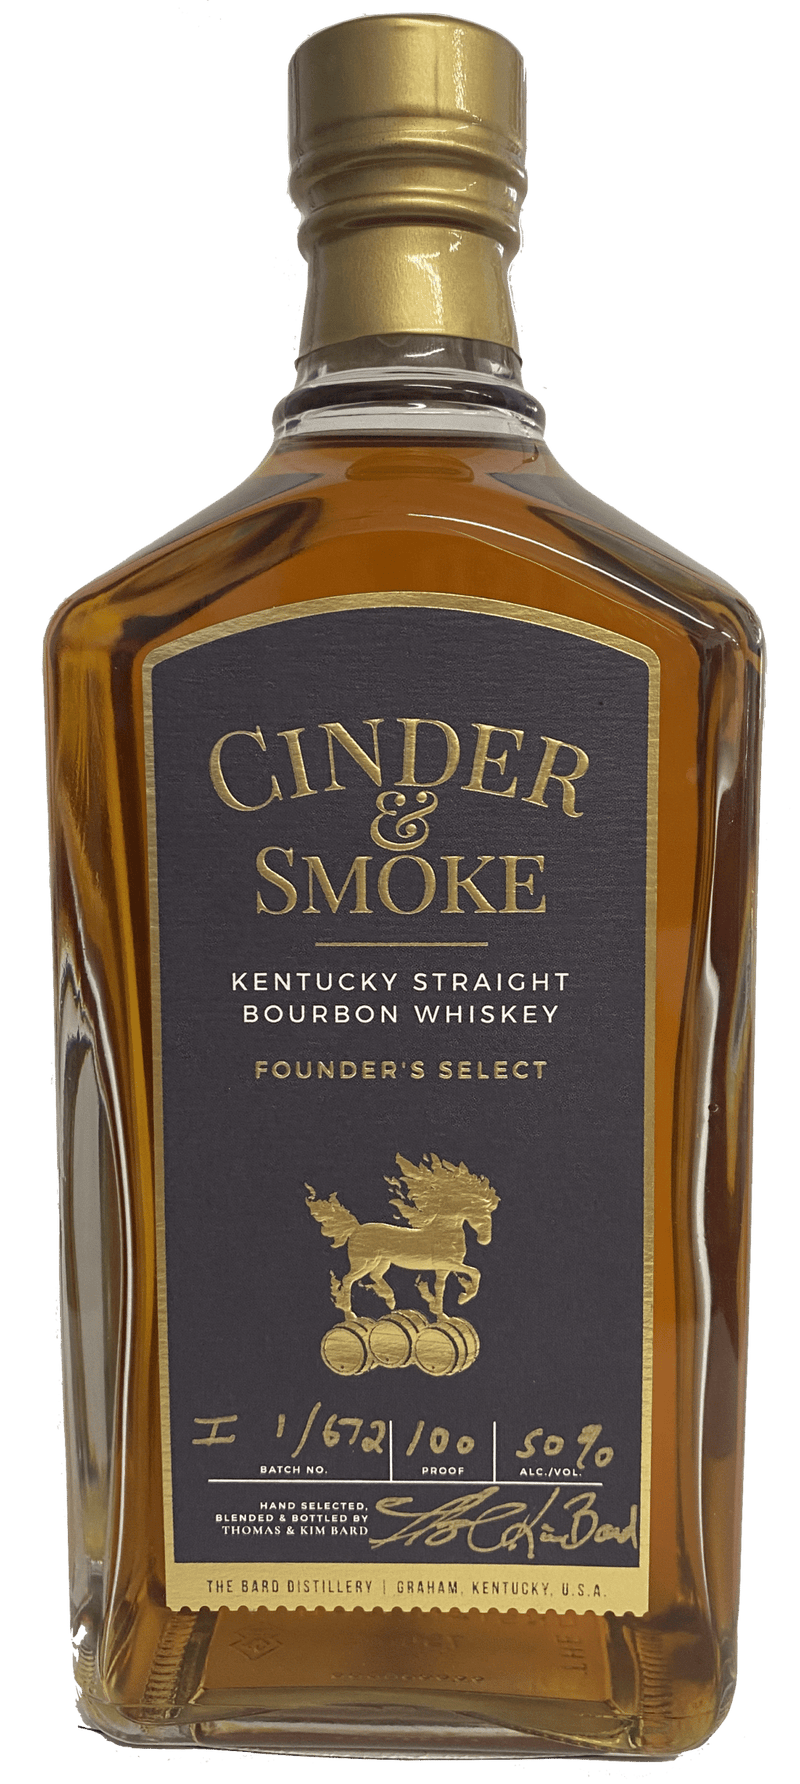 The Bard Distillery - Cinder & Smoke Founder&